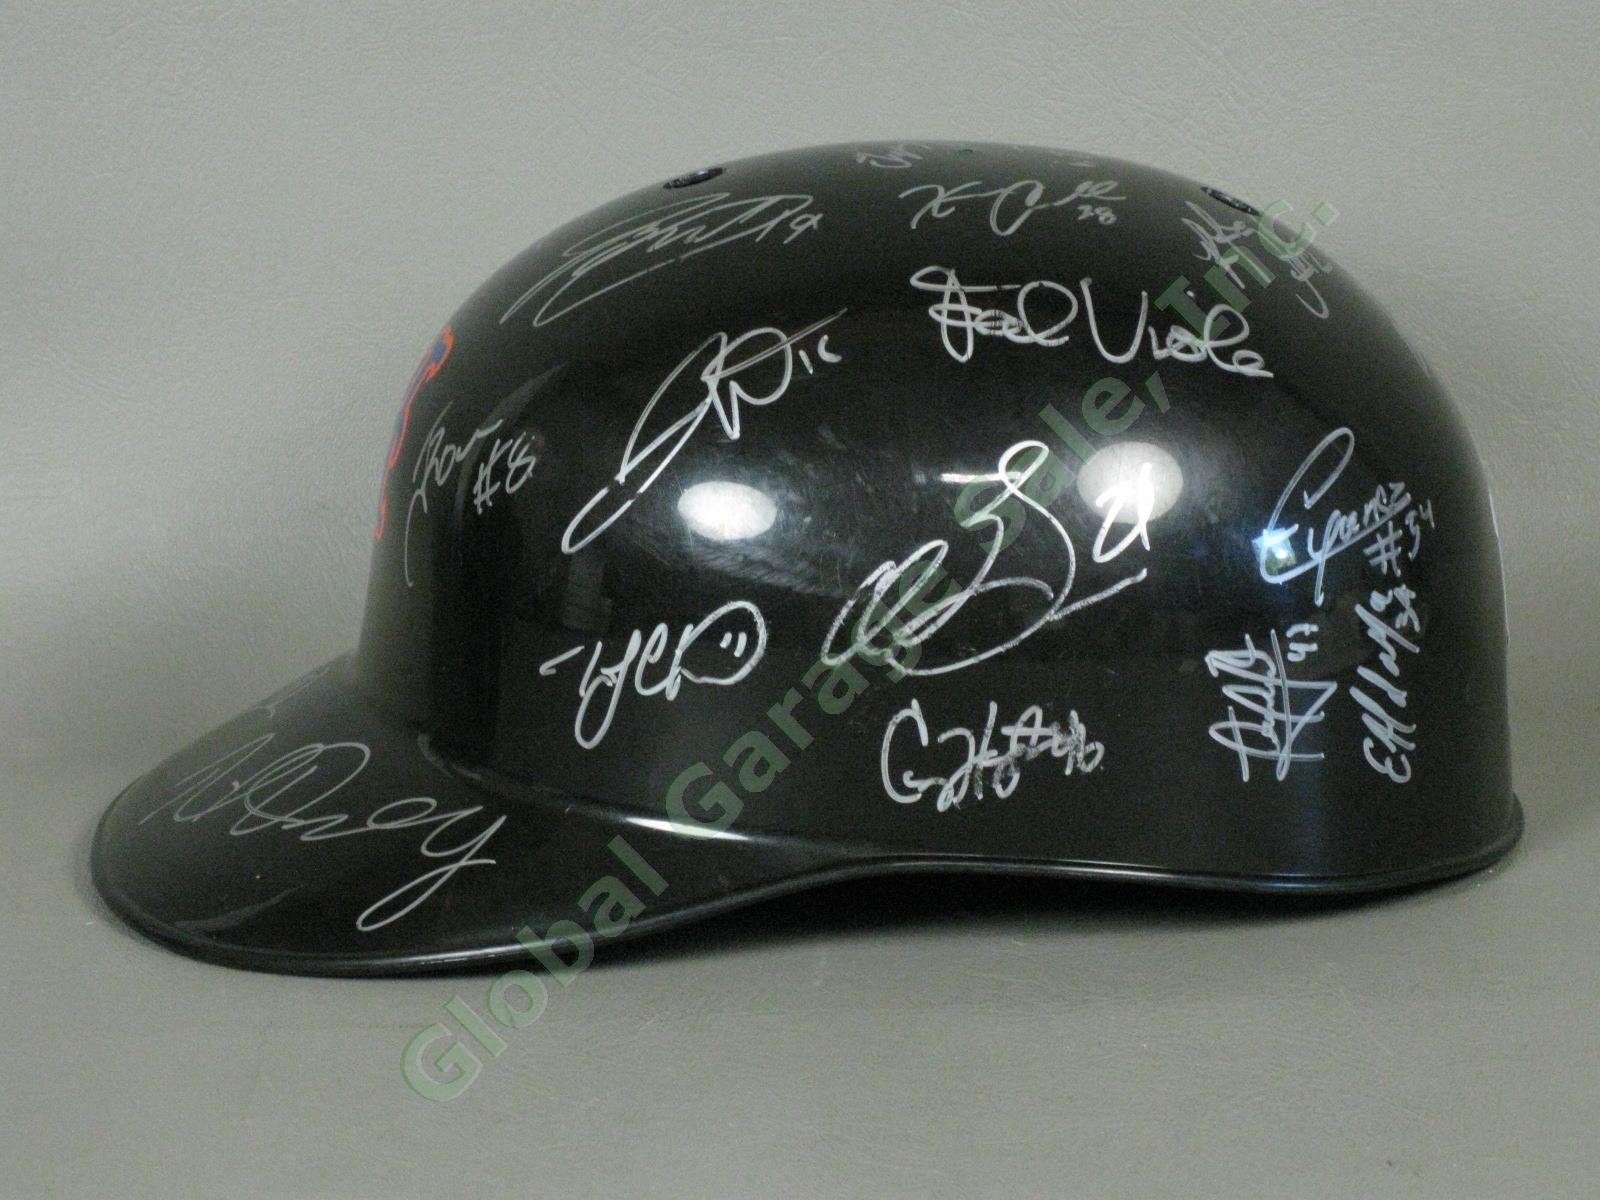 2011 Brooklyn Cyclones Team Signed Baseball Helmet MiLB MLB NYPL New York Mets 3